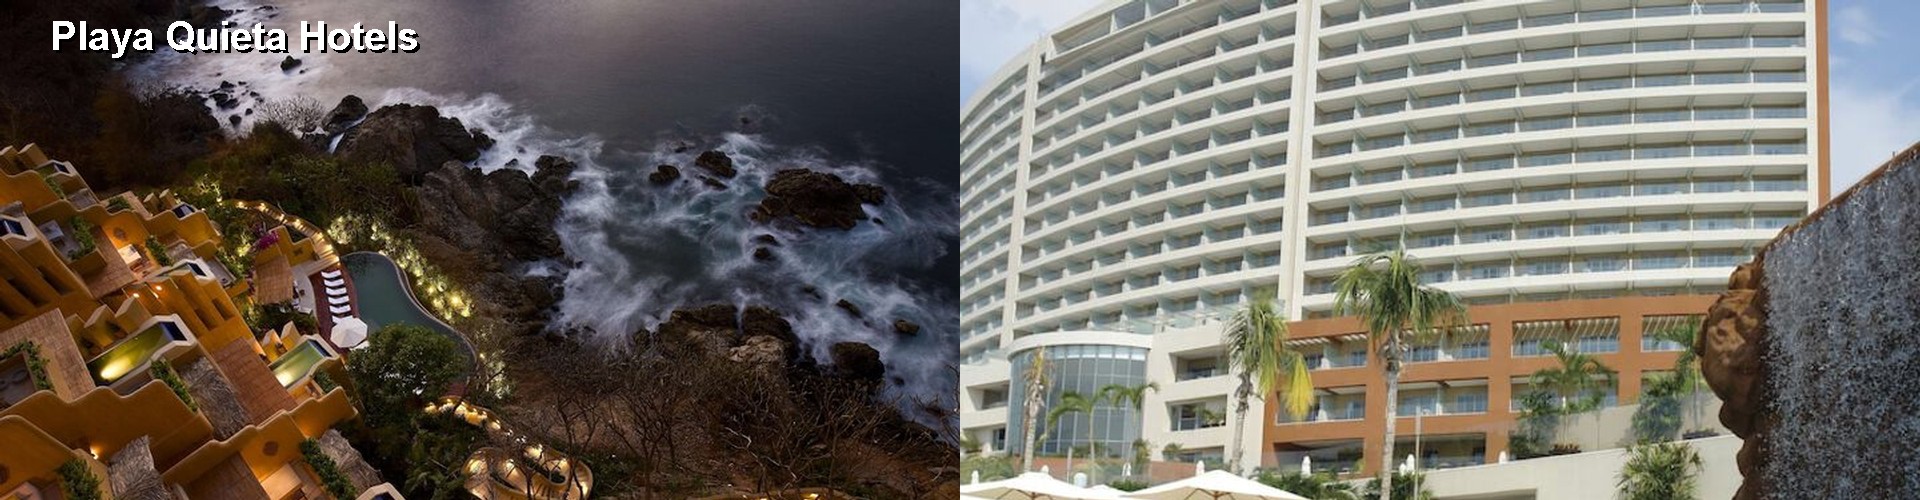 5 Best Hotels near Playa Quieta